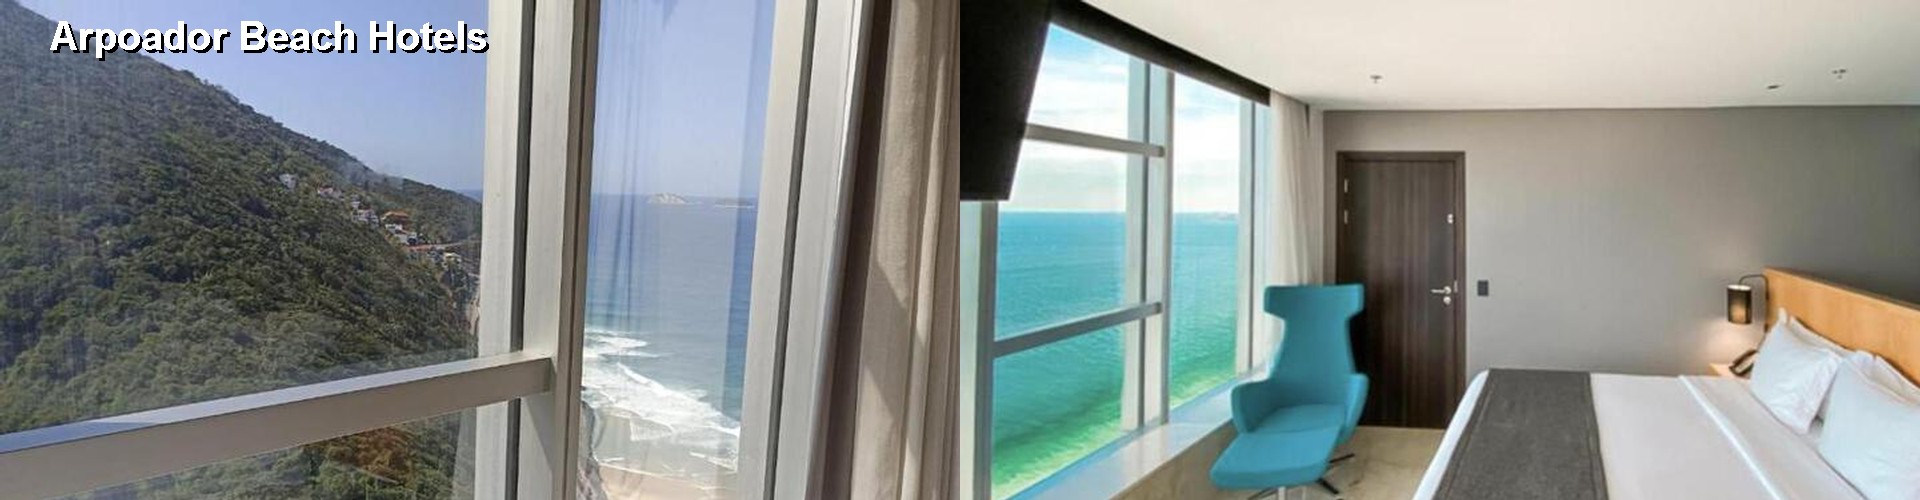 5 Best Hotels near Arpoador Beach